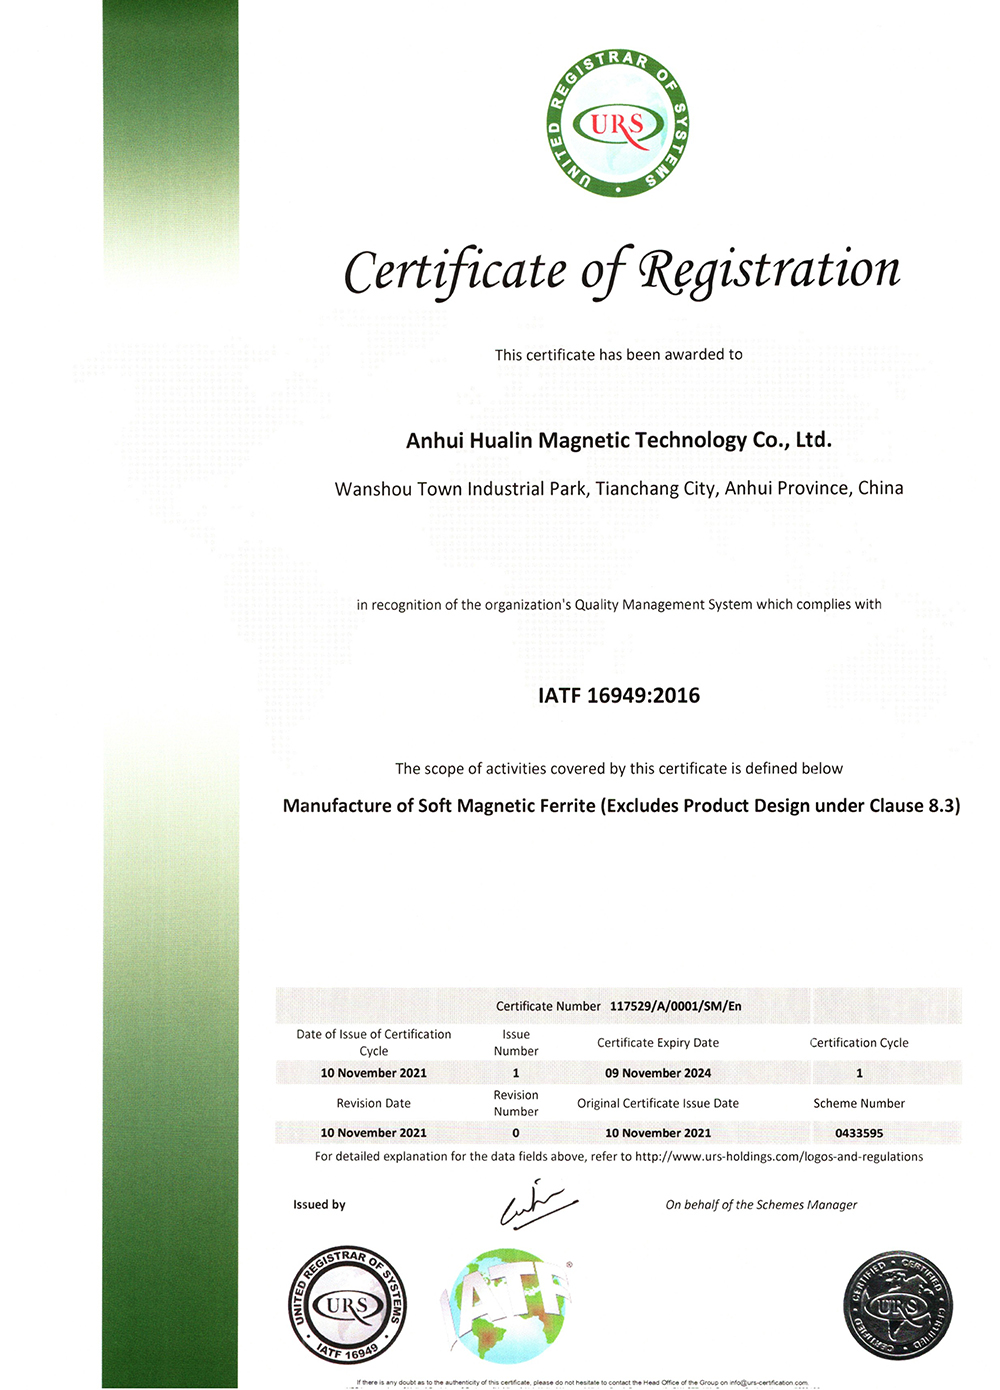 URS Certification certificate